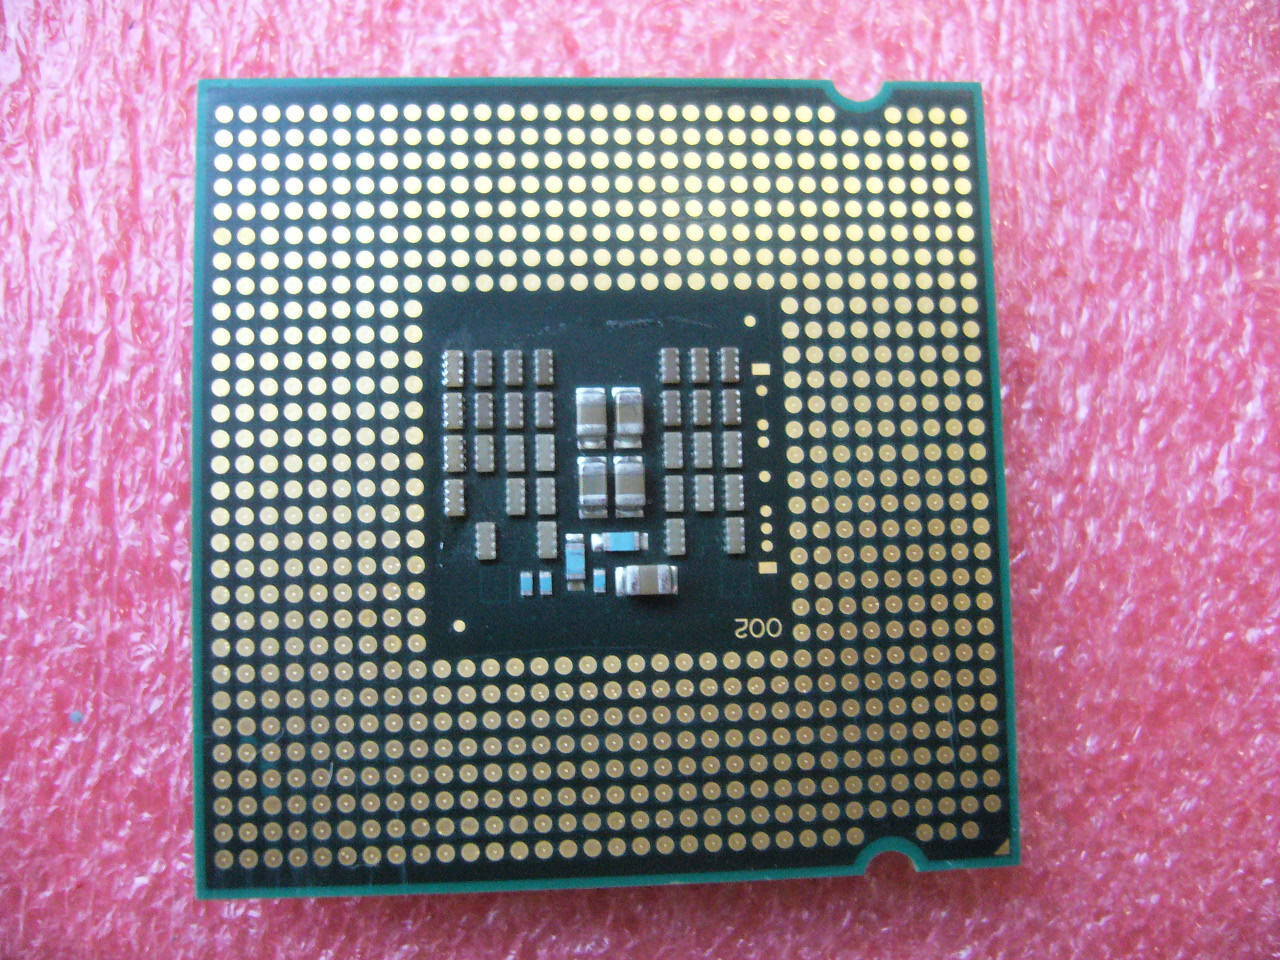 QTY 1x INTEL Quad Cores Q8200S CPU 2.33GHz/4MB/1333Mhz LGA775 SLG9T 65W - Click Image to Close